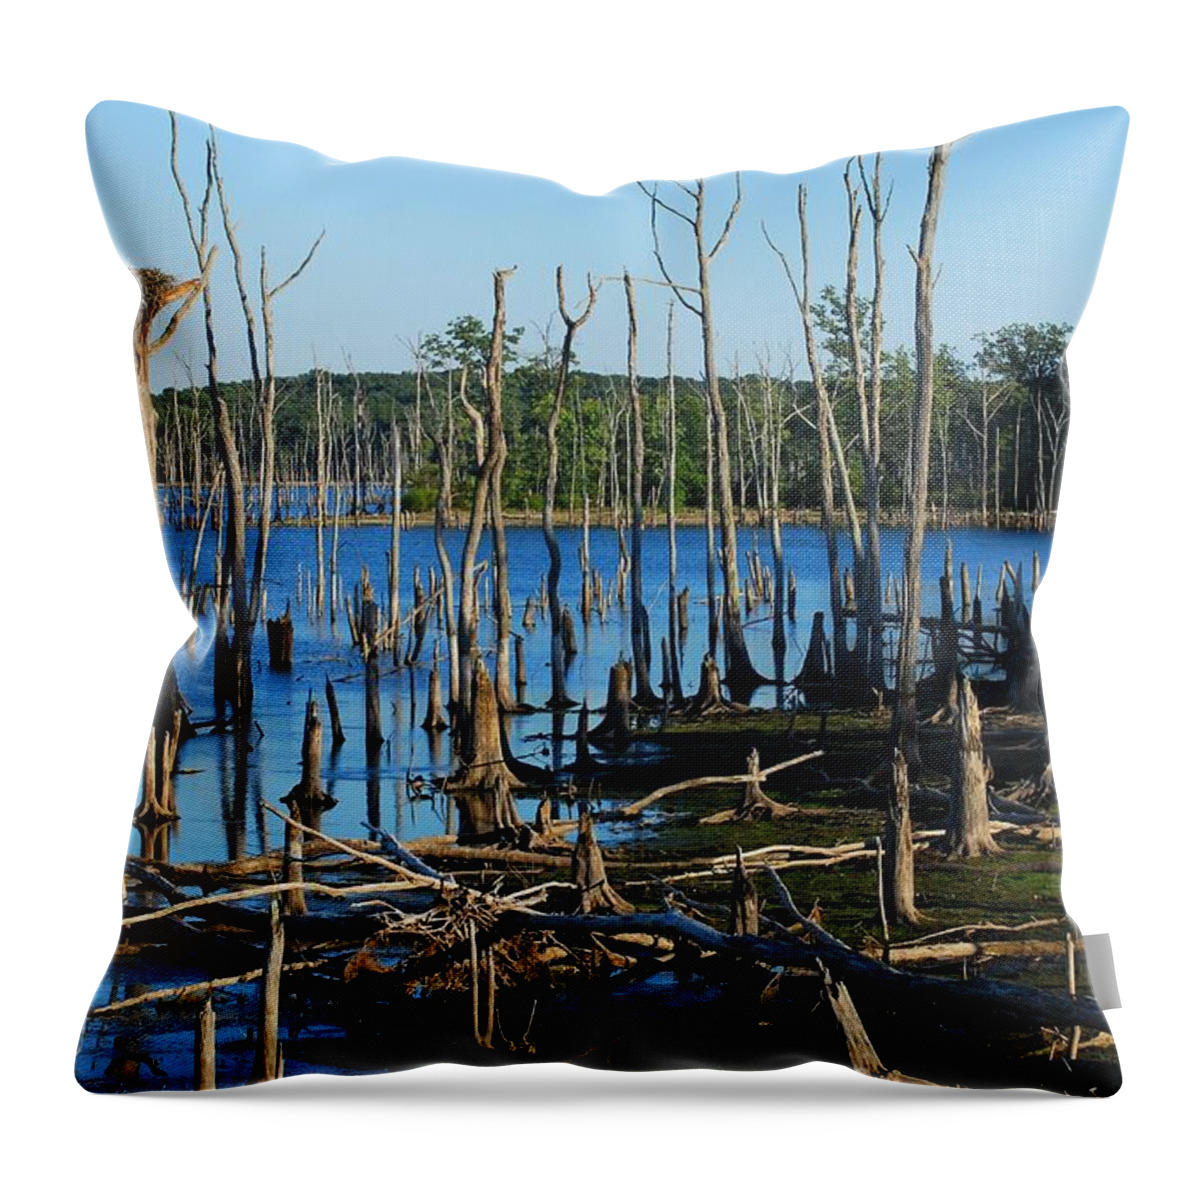 New Jersey Throw Pillow featuring the photograph Still Wood - Manasquan Reservoir by Angie Tirado